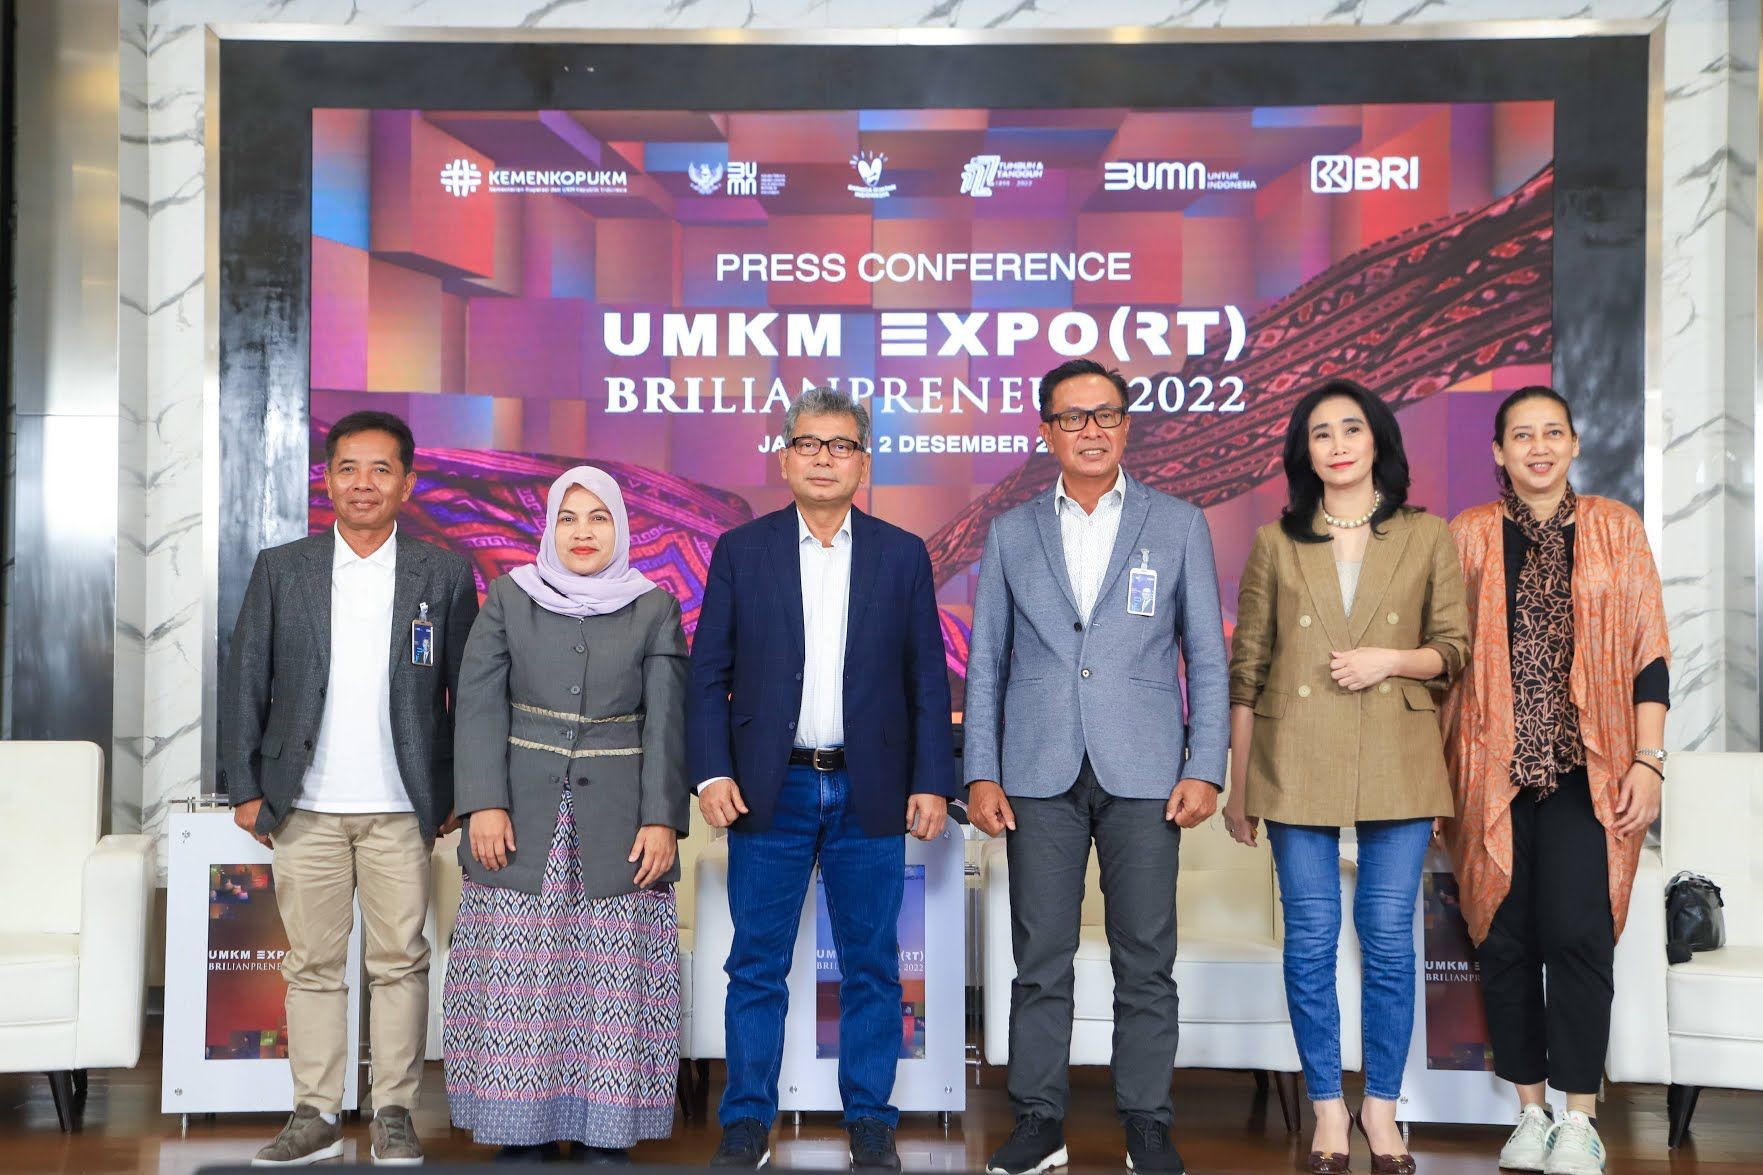 BRI menargetkan transaksi sebesar US$15 juta atau Rp1,125 triliun dalam gelaran BRI UMKM EXPO(RT) BRILianpreneur 2022, perhelatan rutin untuk mempromosikan UMKM Indonesia ke pasar global. 